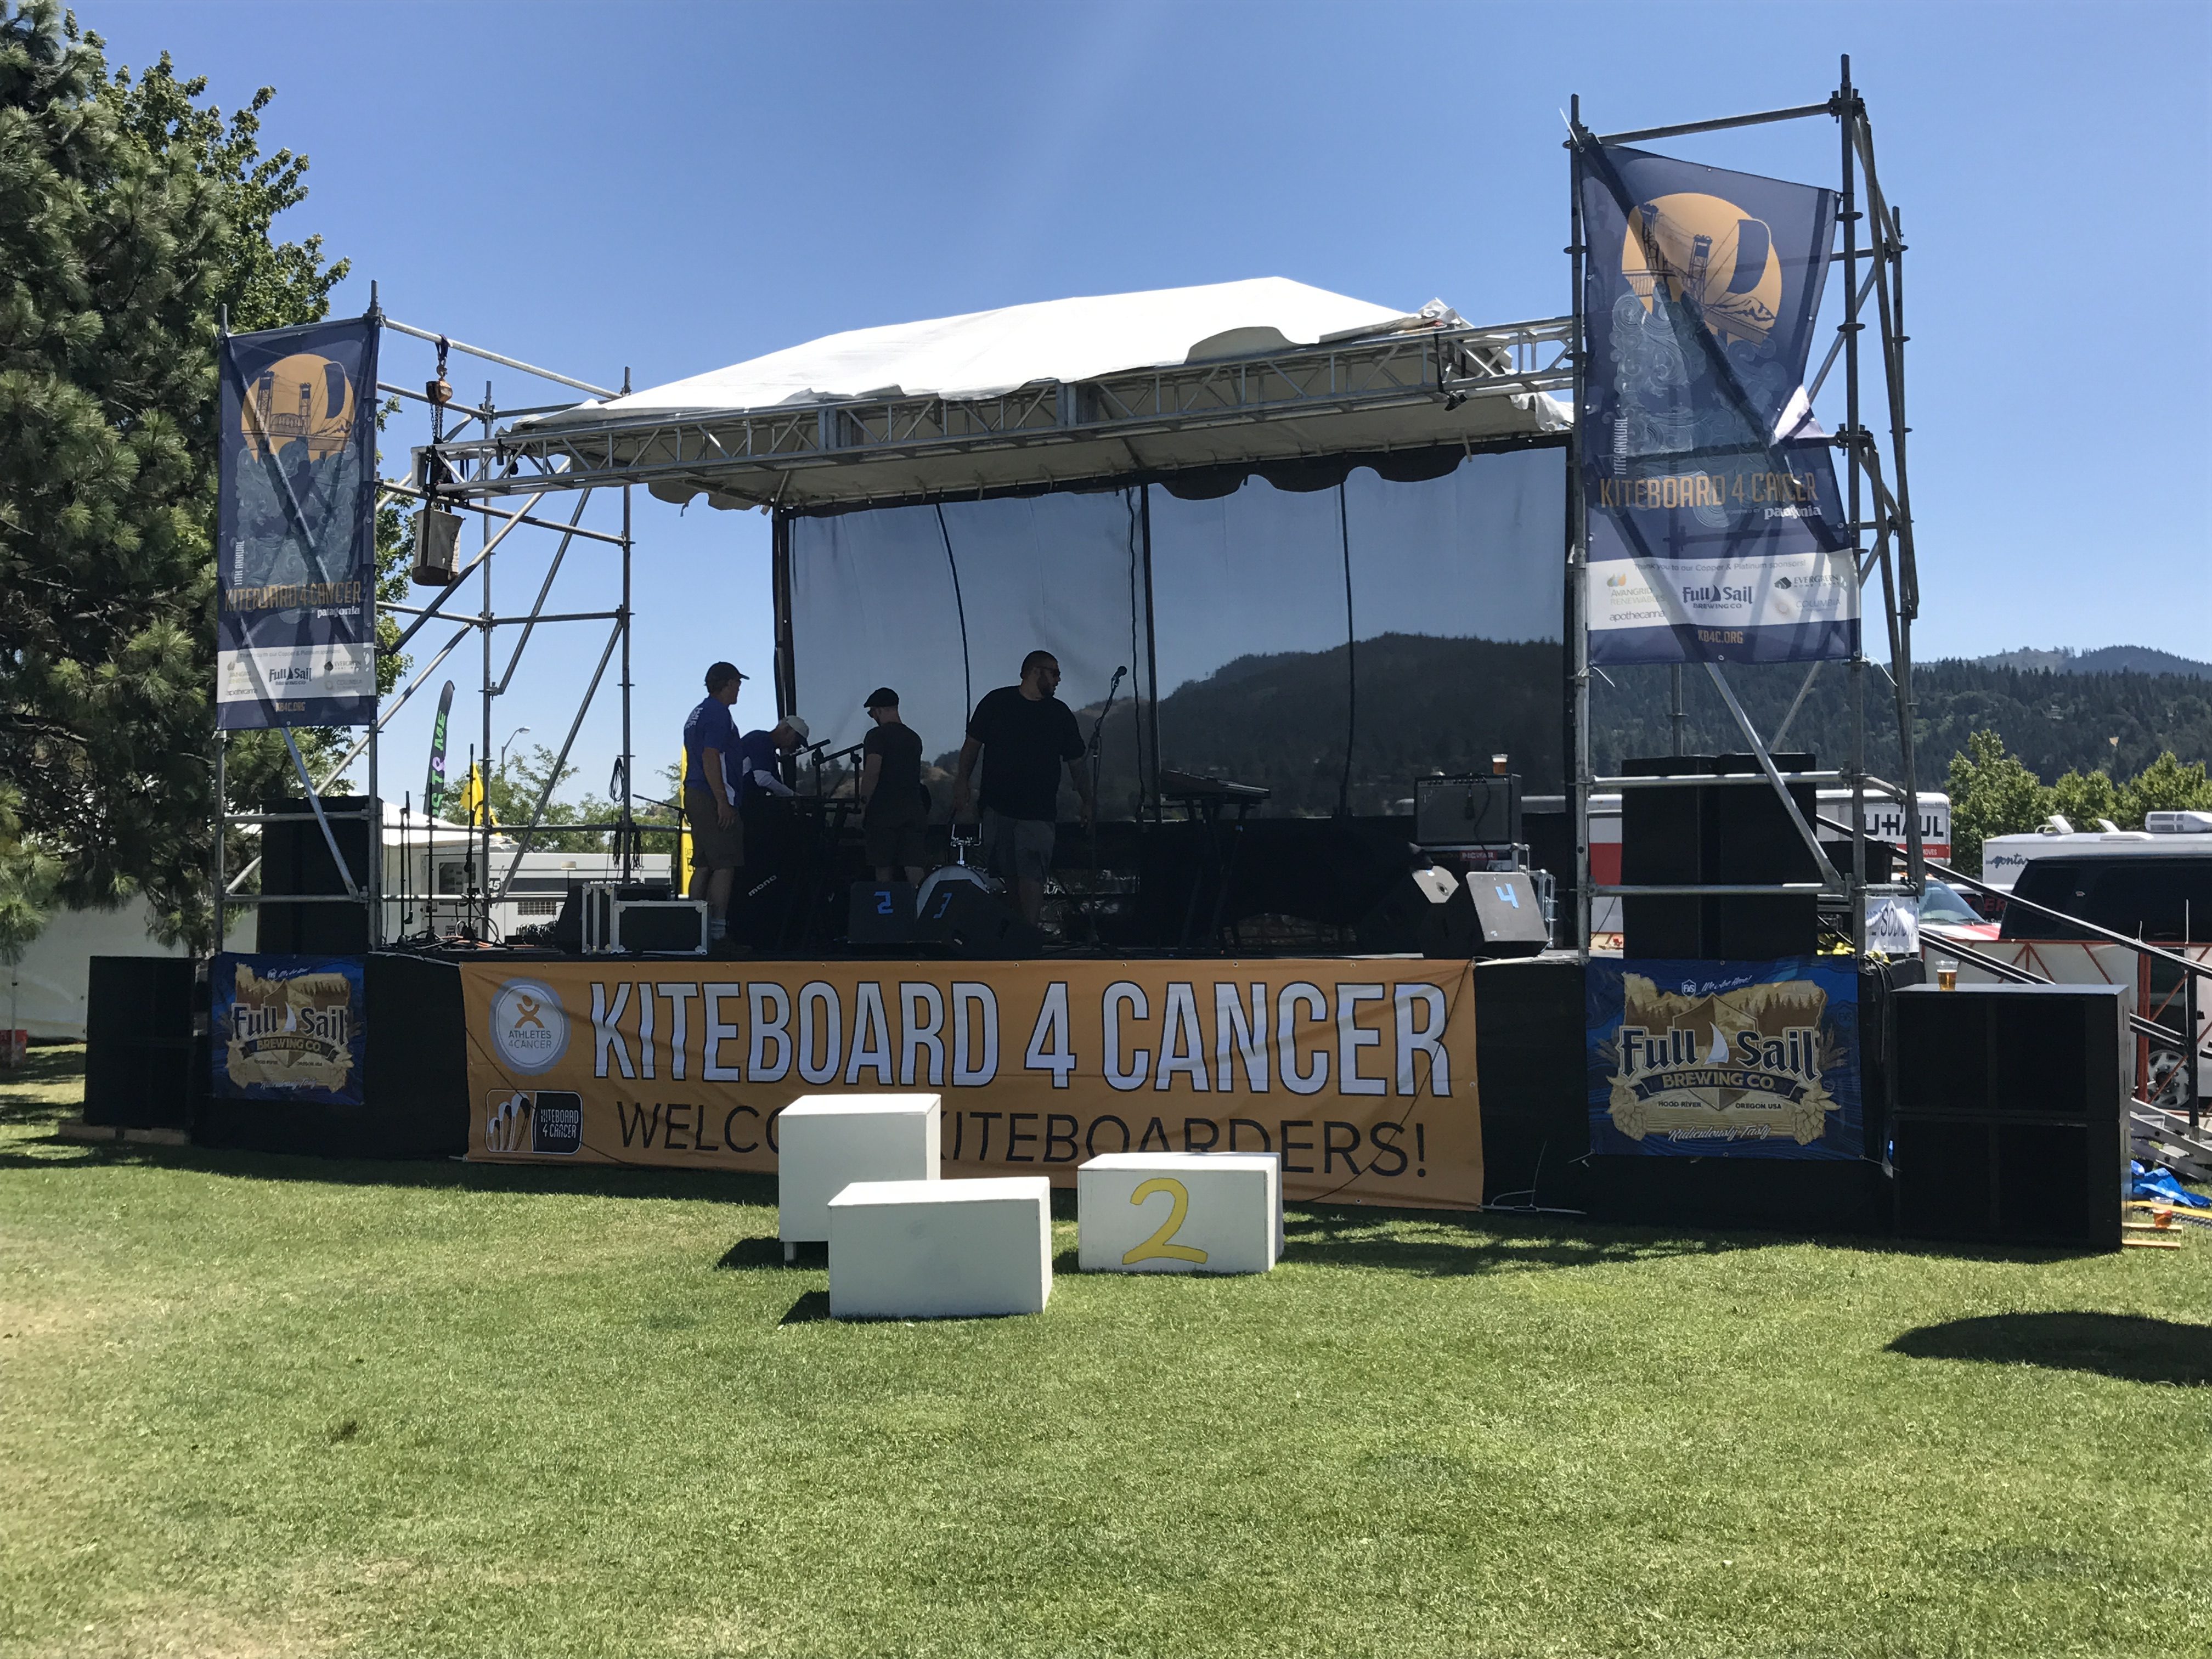 Kiteboard 4 Cancer stage set up